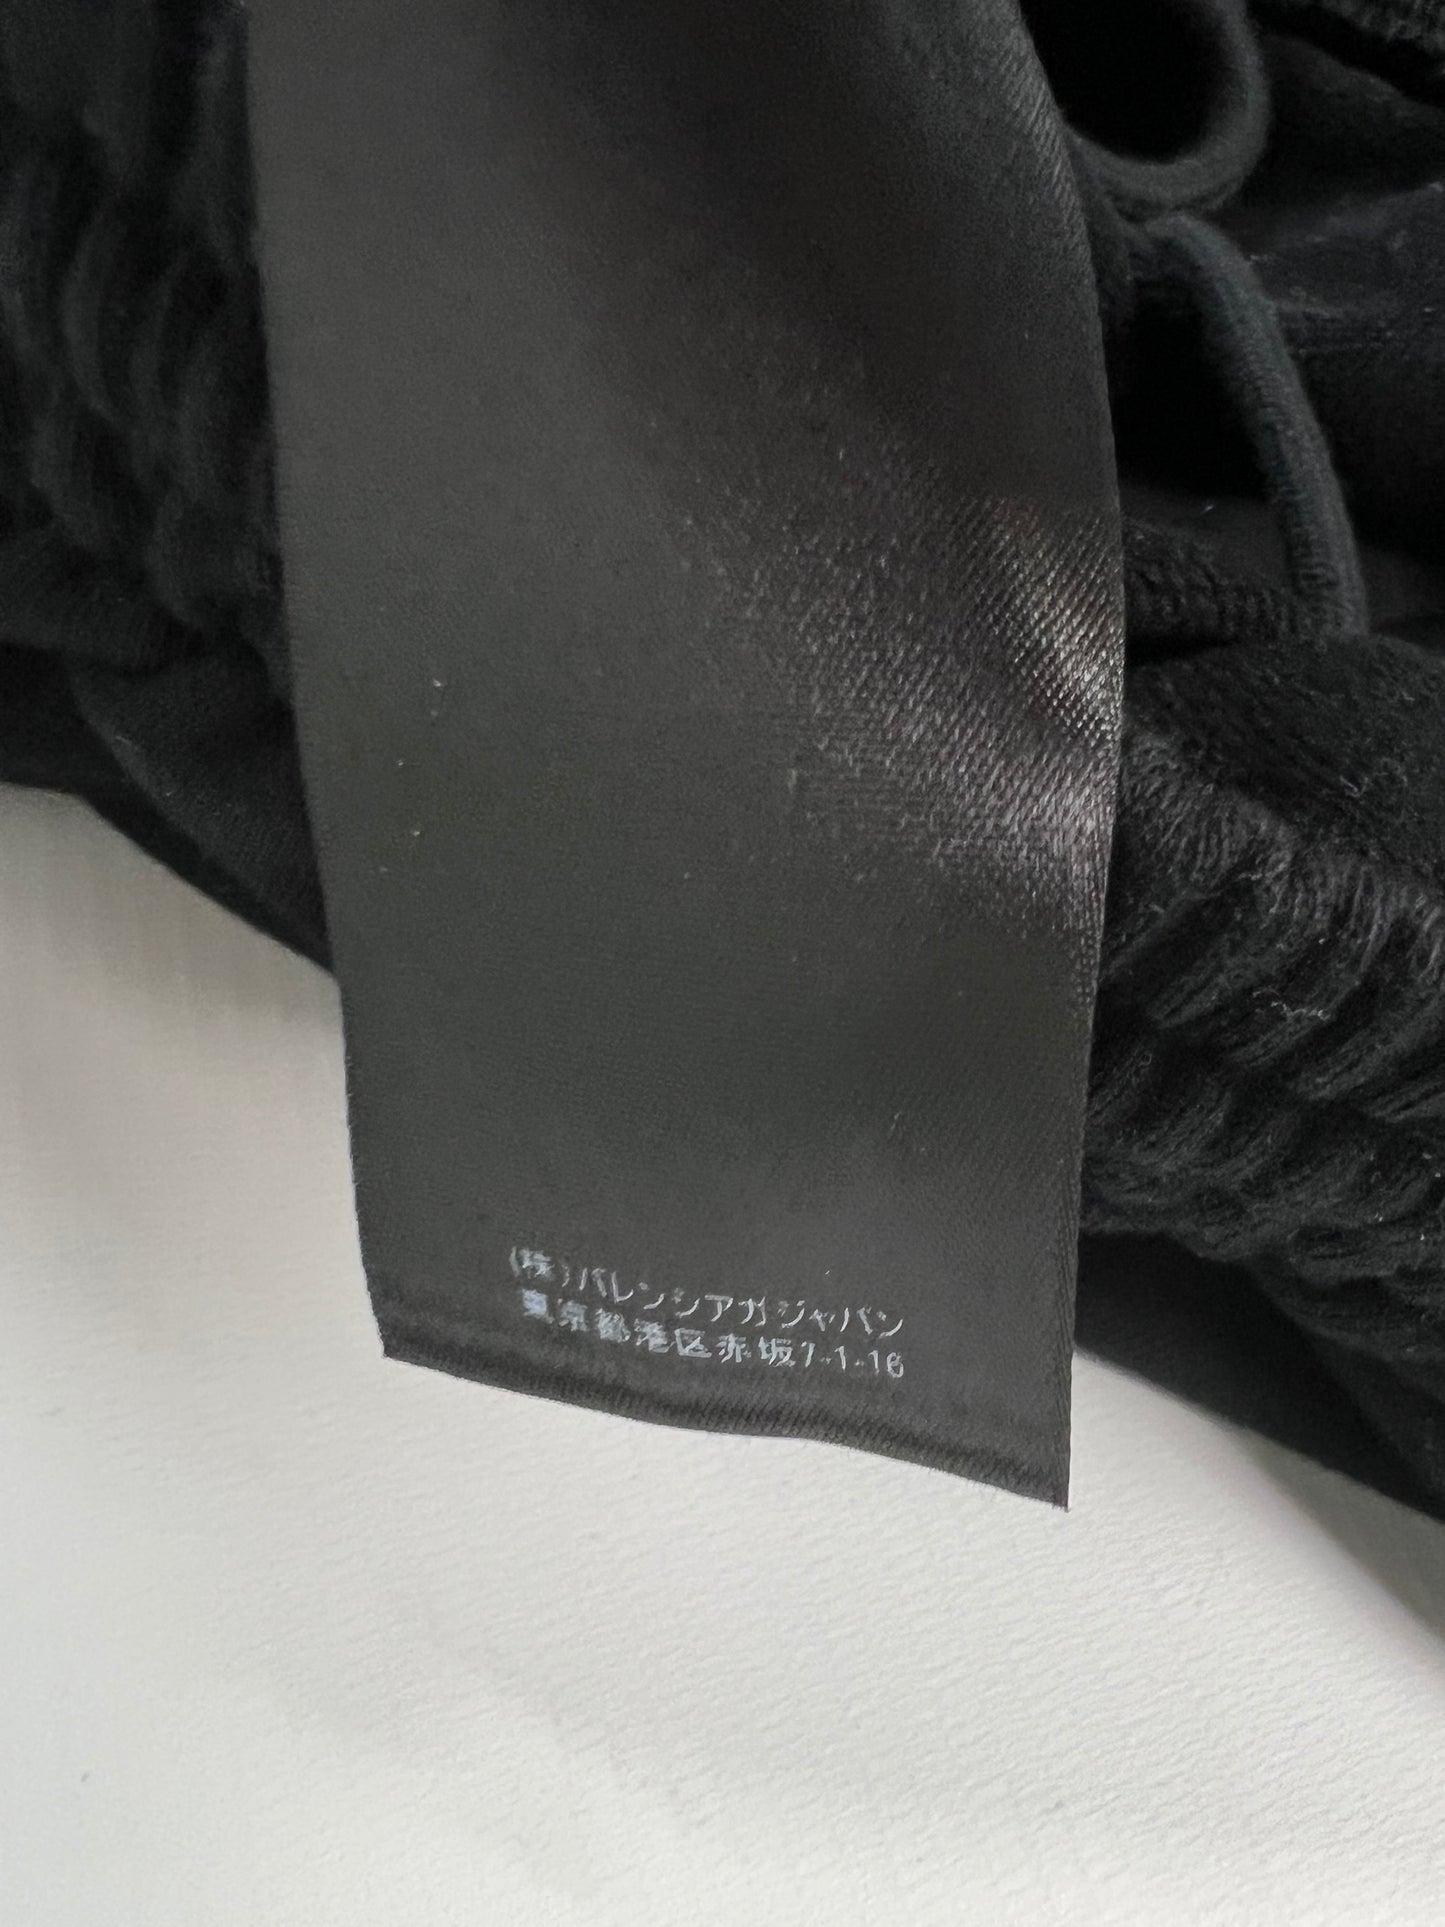 Balenciaga Sporty B French Terry Sweatpants in black SZ:L